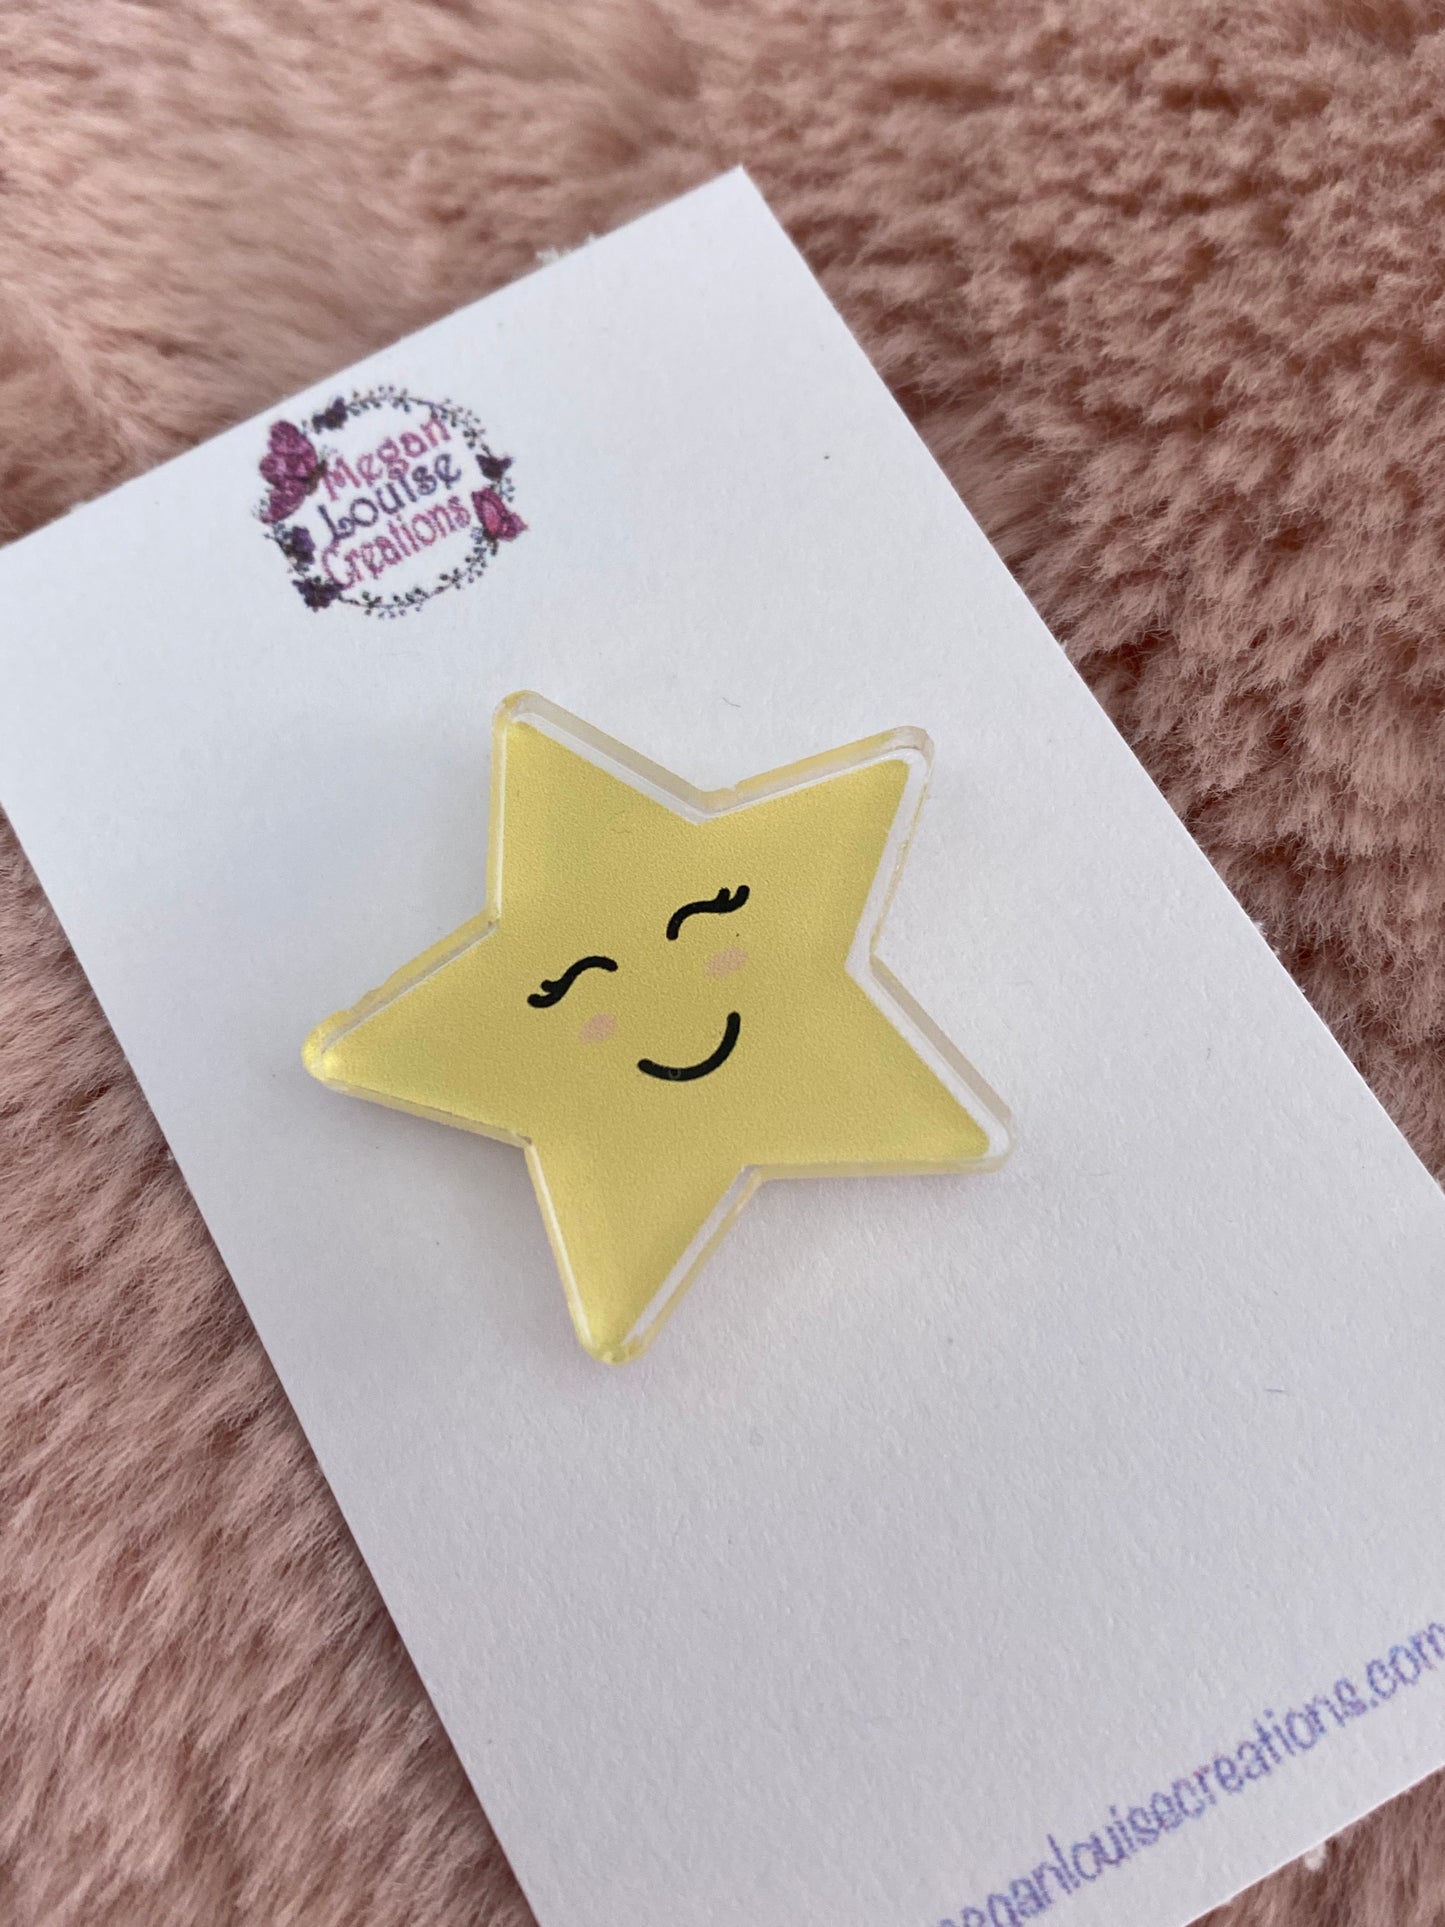 Acrylic star pin badge